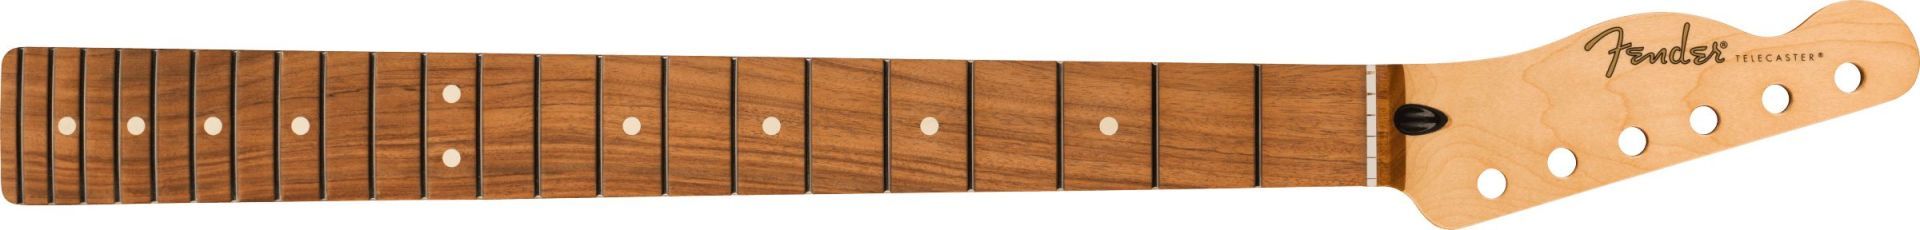 Fender Player Series Telecaster Reverse Headstock Neck 22 Medium Jumbo Frets Pau Ferro 9.5 Modern C